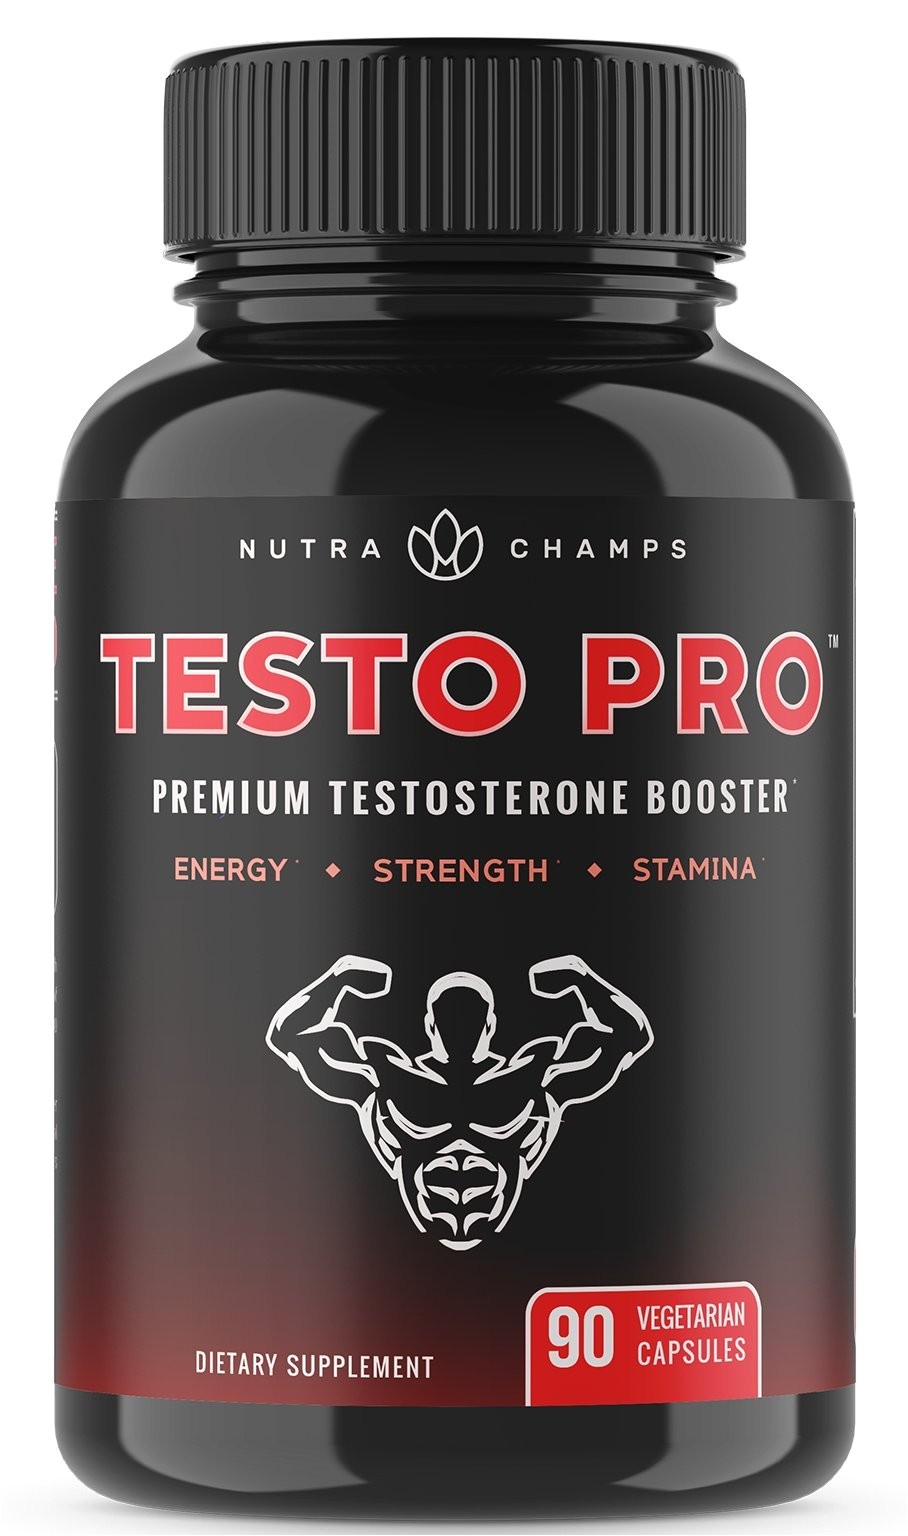 premium testosterone booster for men powerful stamina strength energy endurance supplement